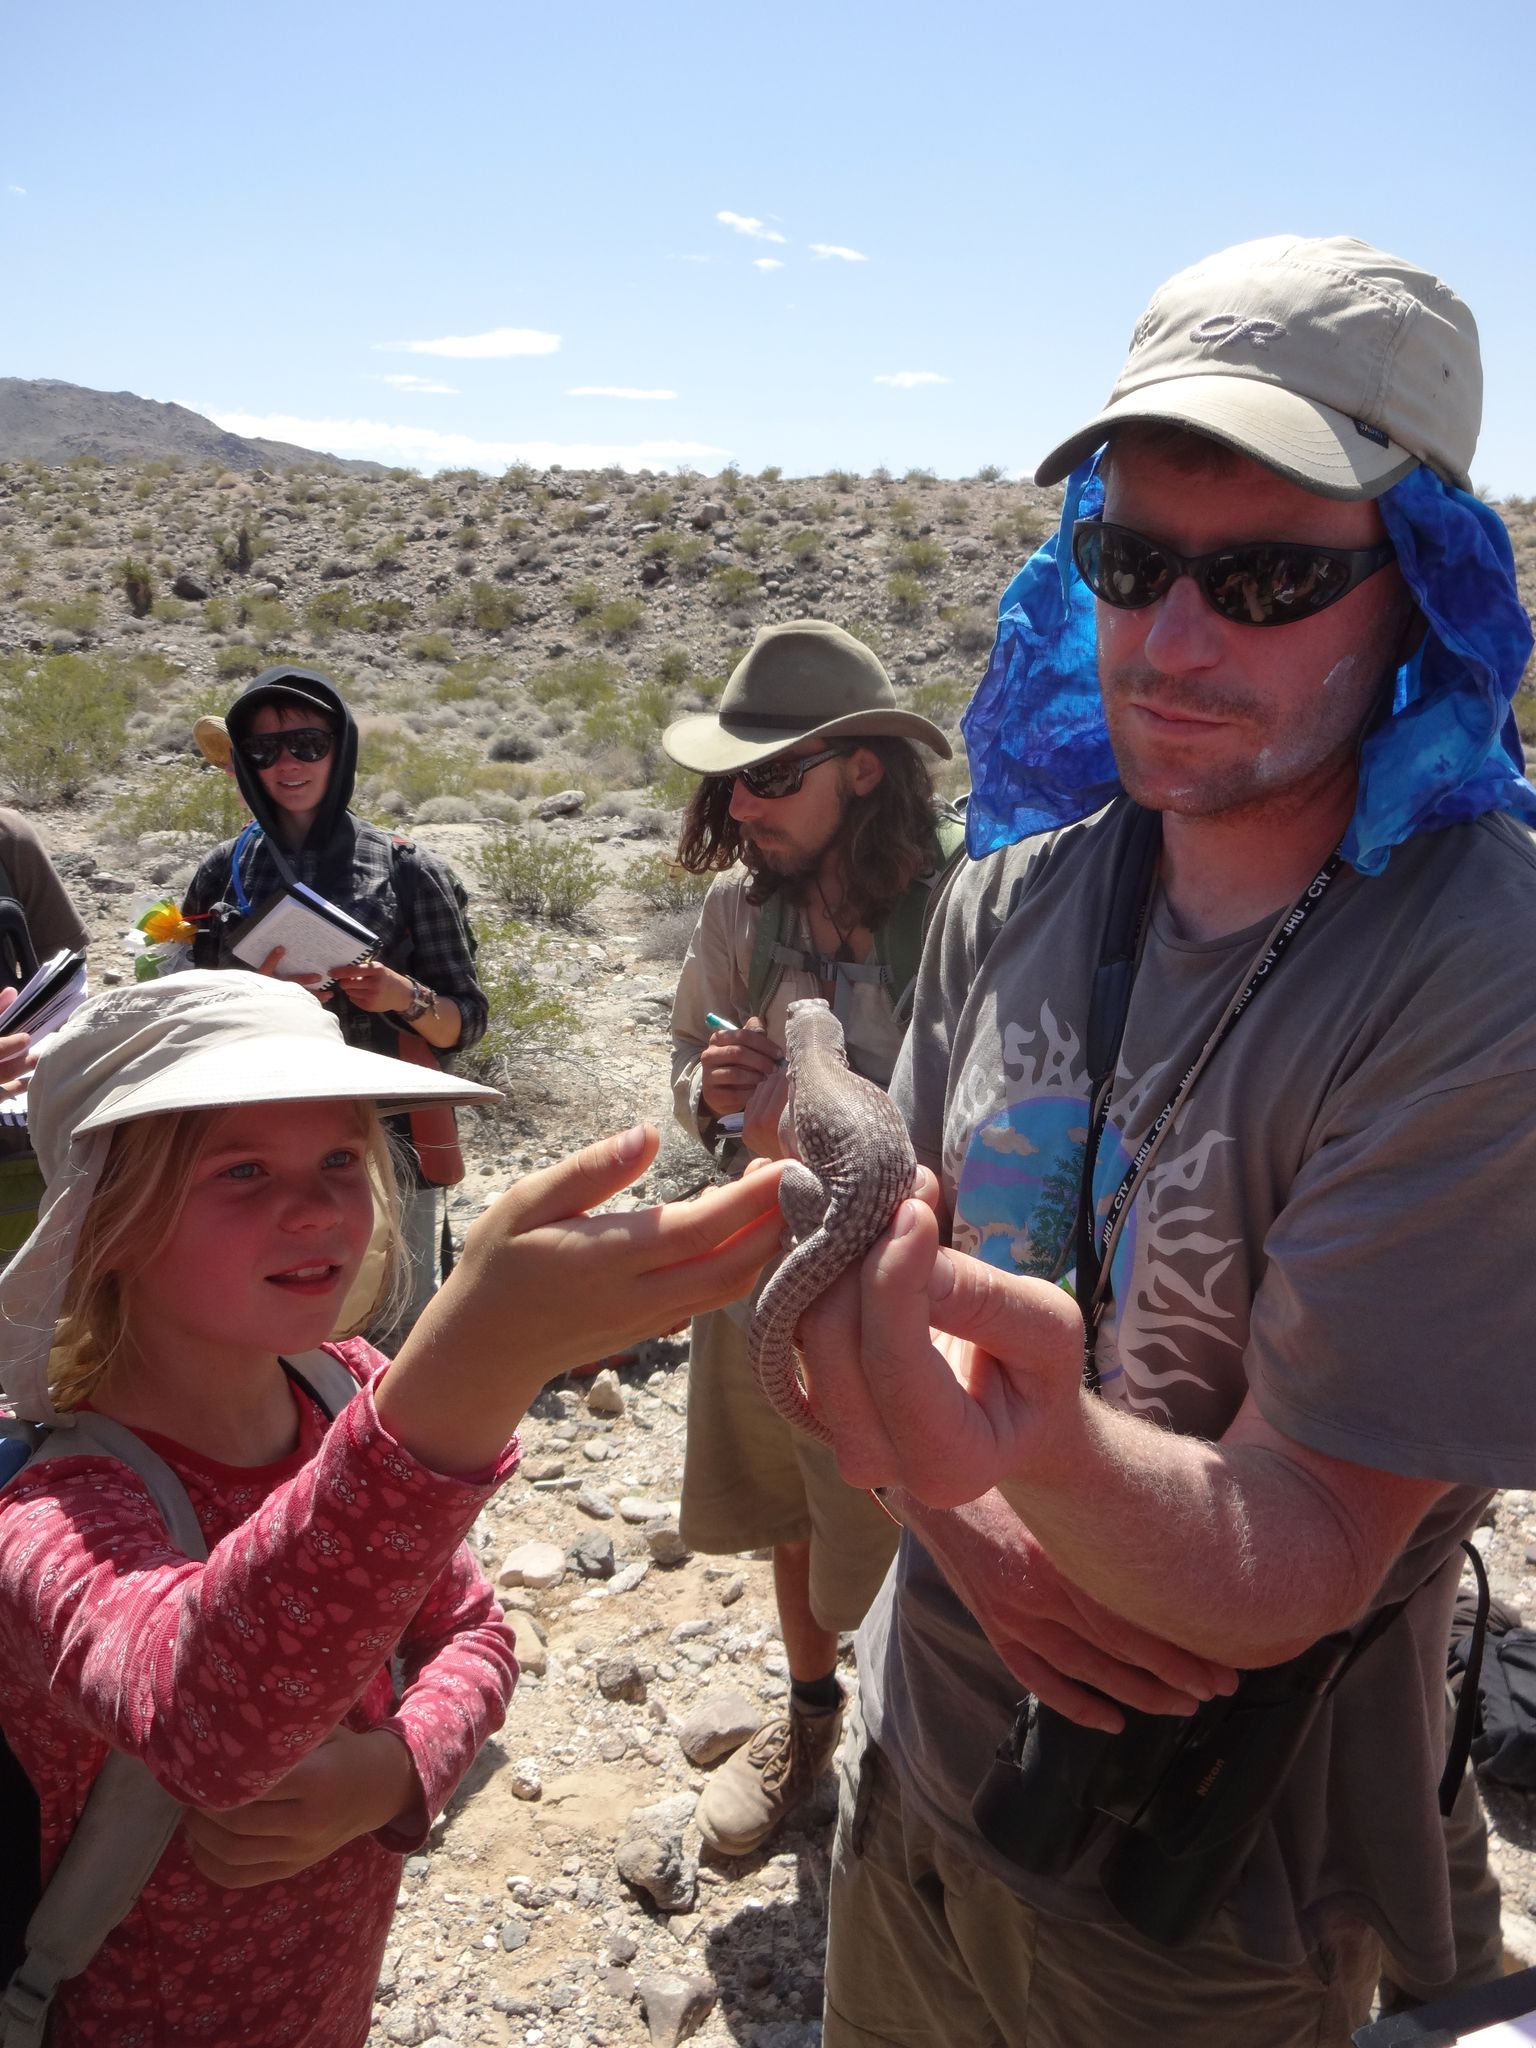 chris lay holding a desert iguana